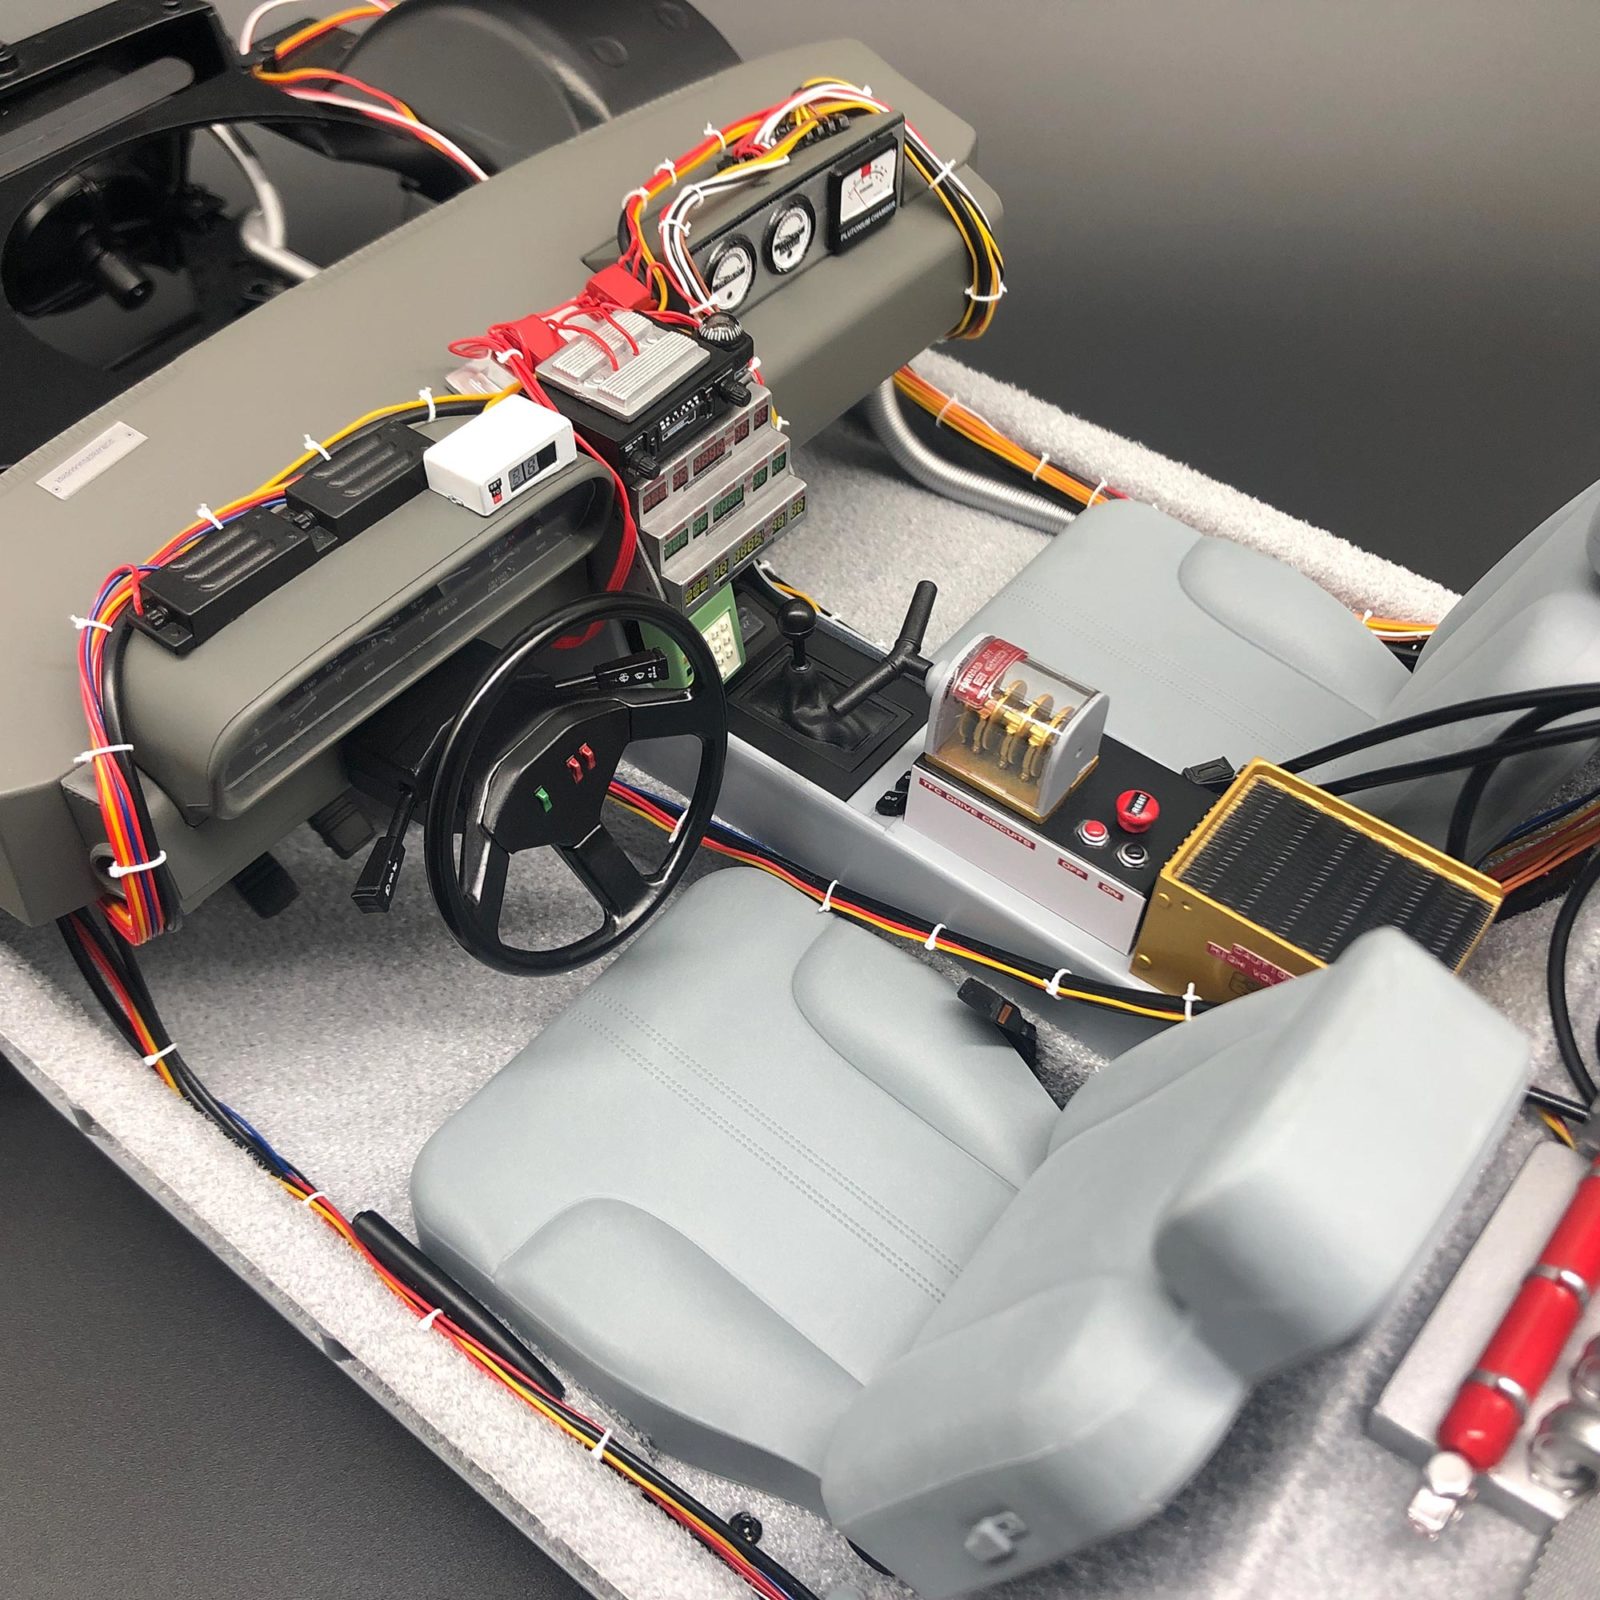 DeLorean model interior with Carpet Set mod installed